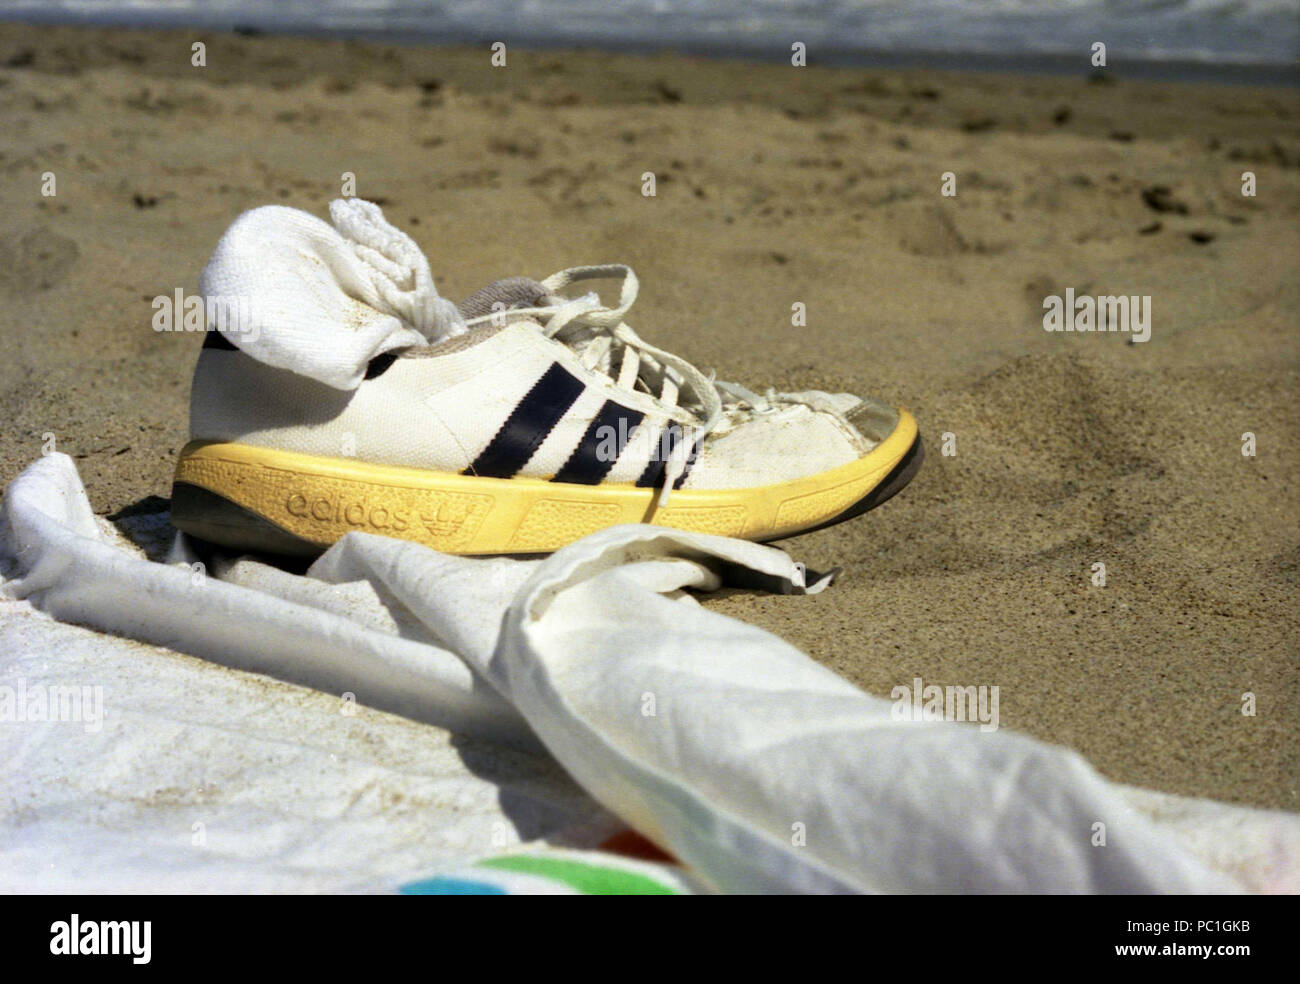 Adidas shoe on the beach, 1980s Stock Photo - Alamy